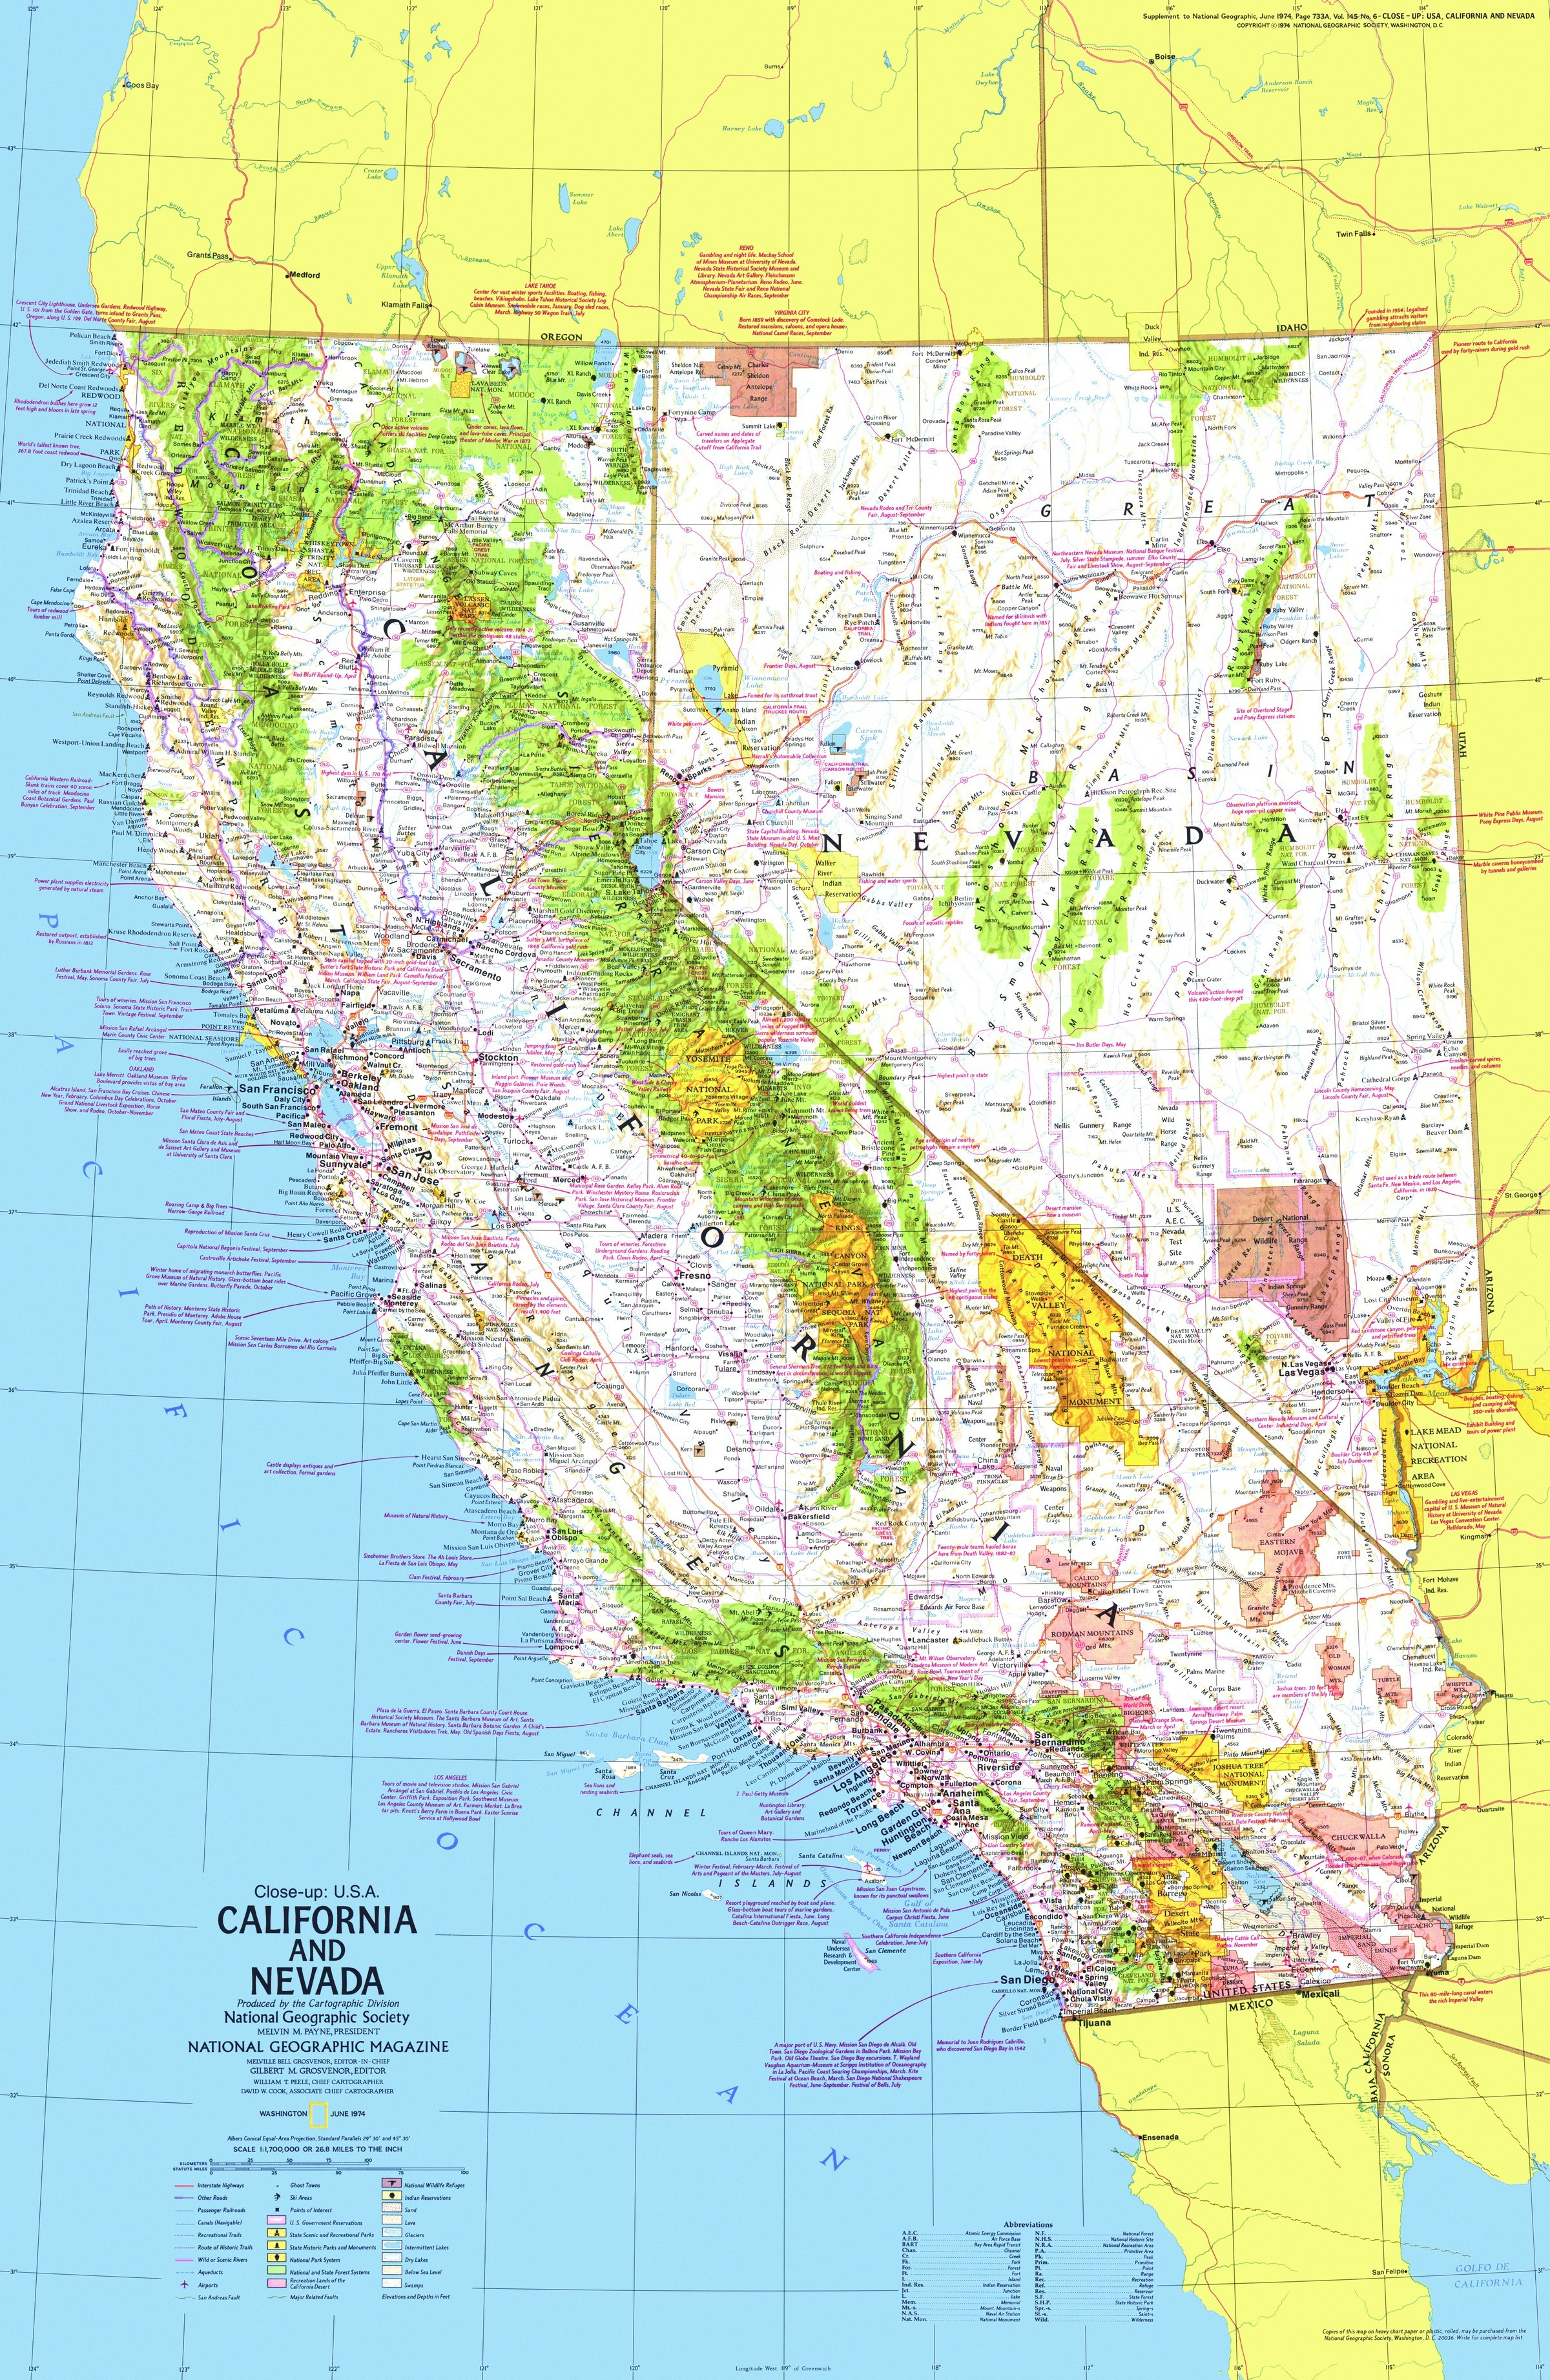 California And Nevada Map 1974 Side 1 - Maps - California Nevada Map